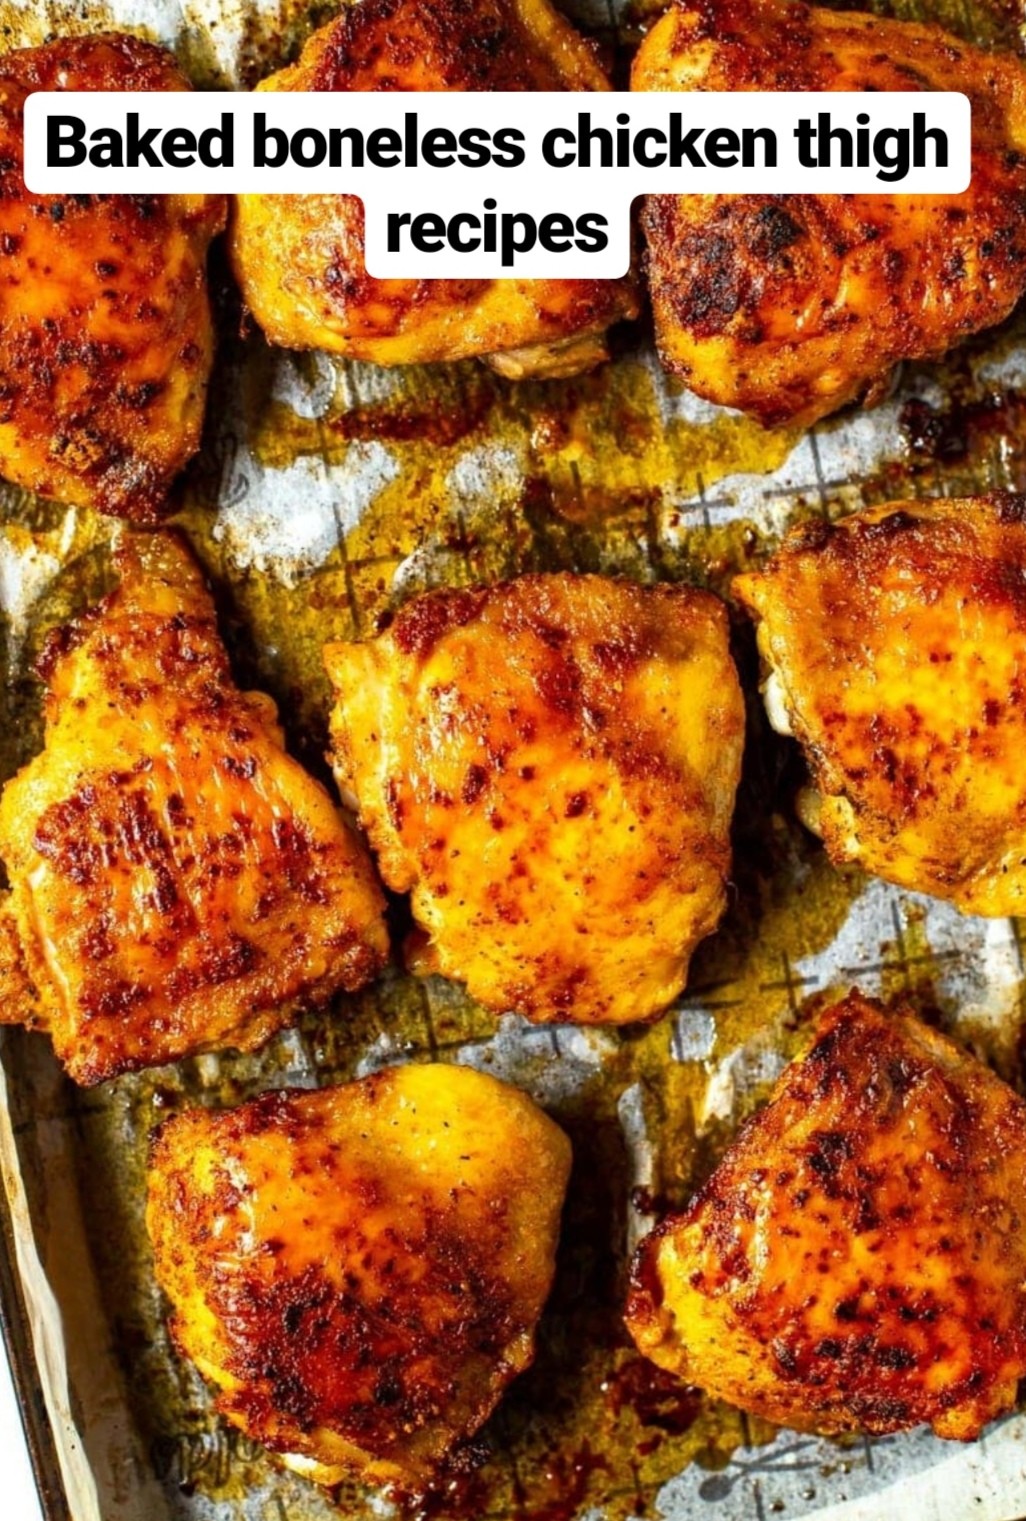 baked boneless chicken thigh recipes